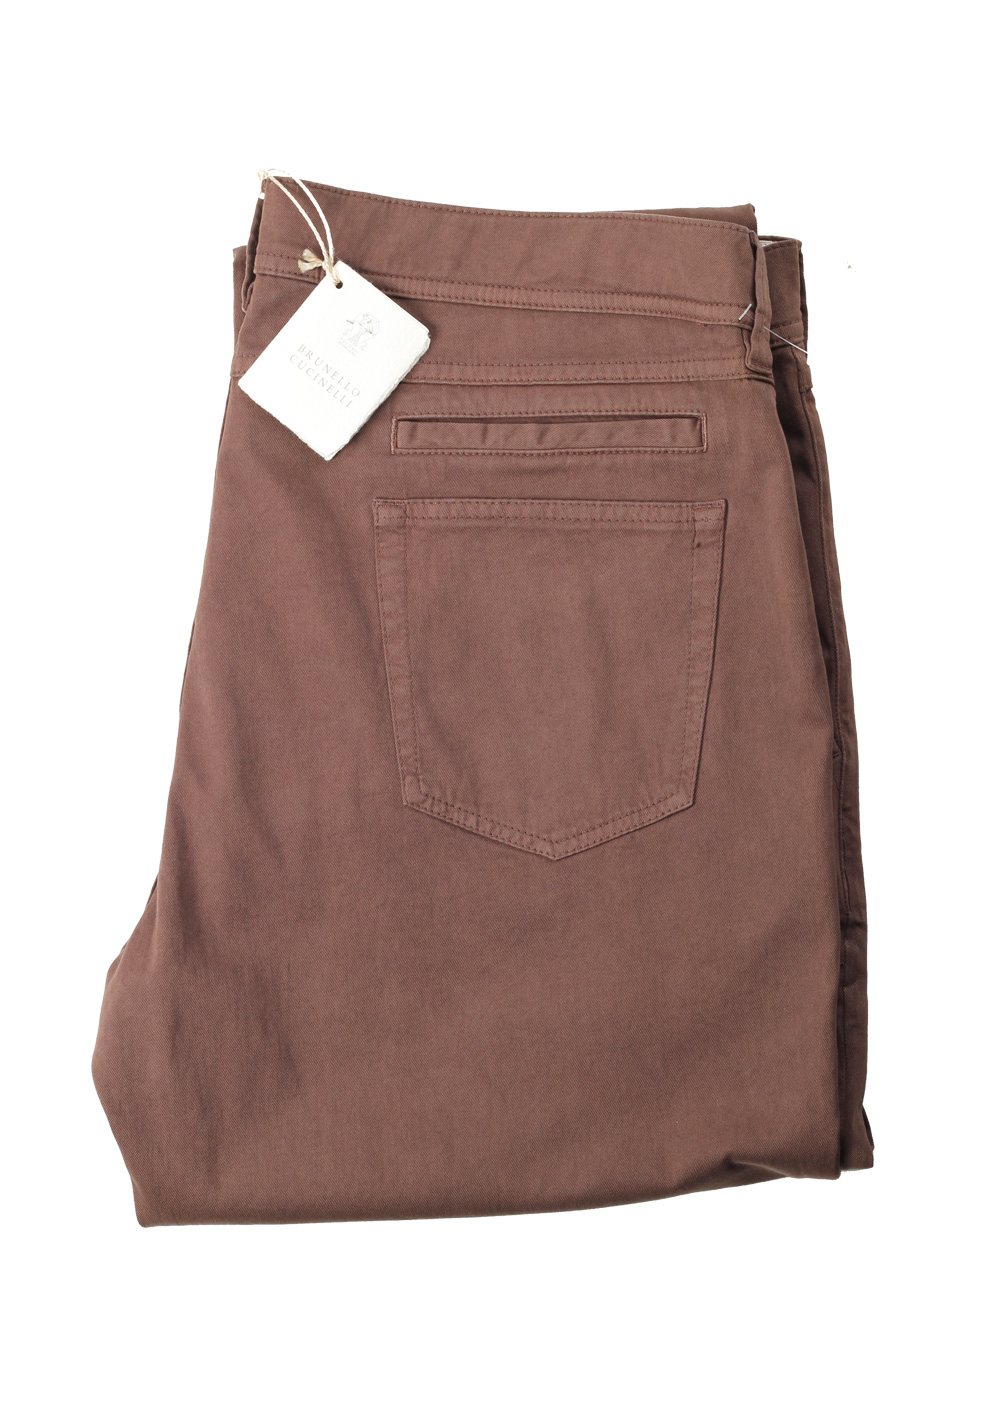 Brunello Cucinelli Brown Trousers Size 54 / 38 U.S. | Costume Limité